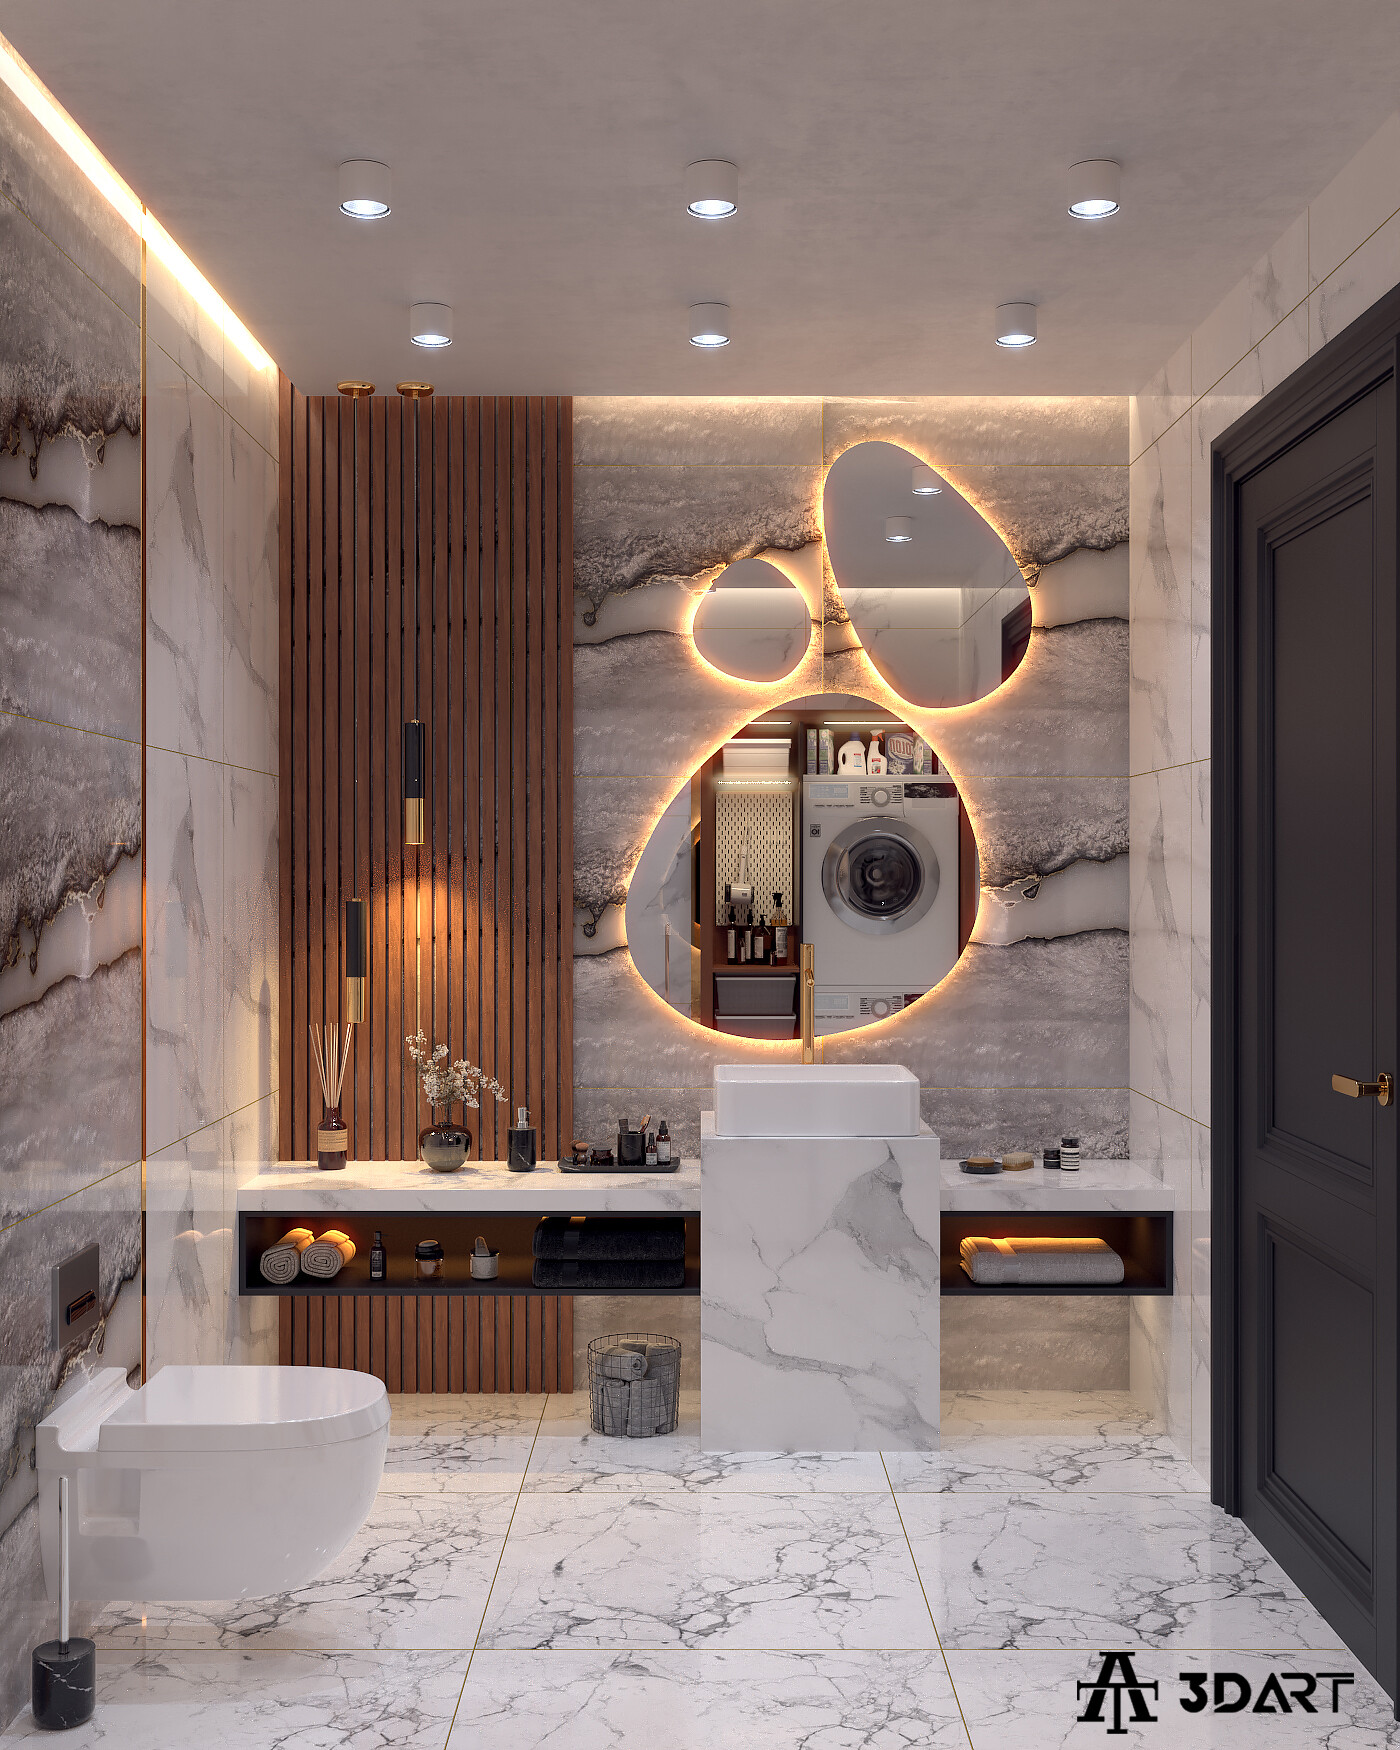 ArtStation - Bathroom design